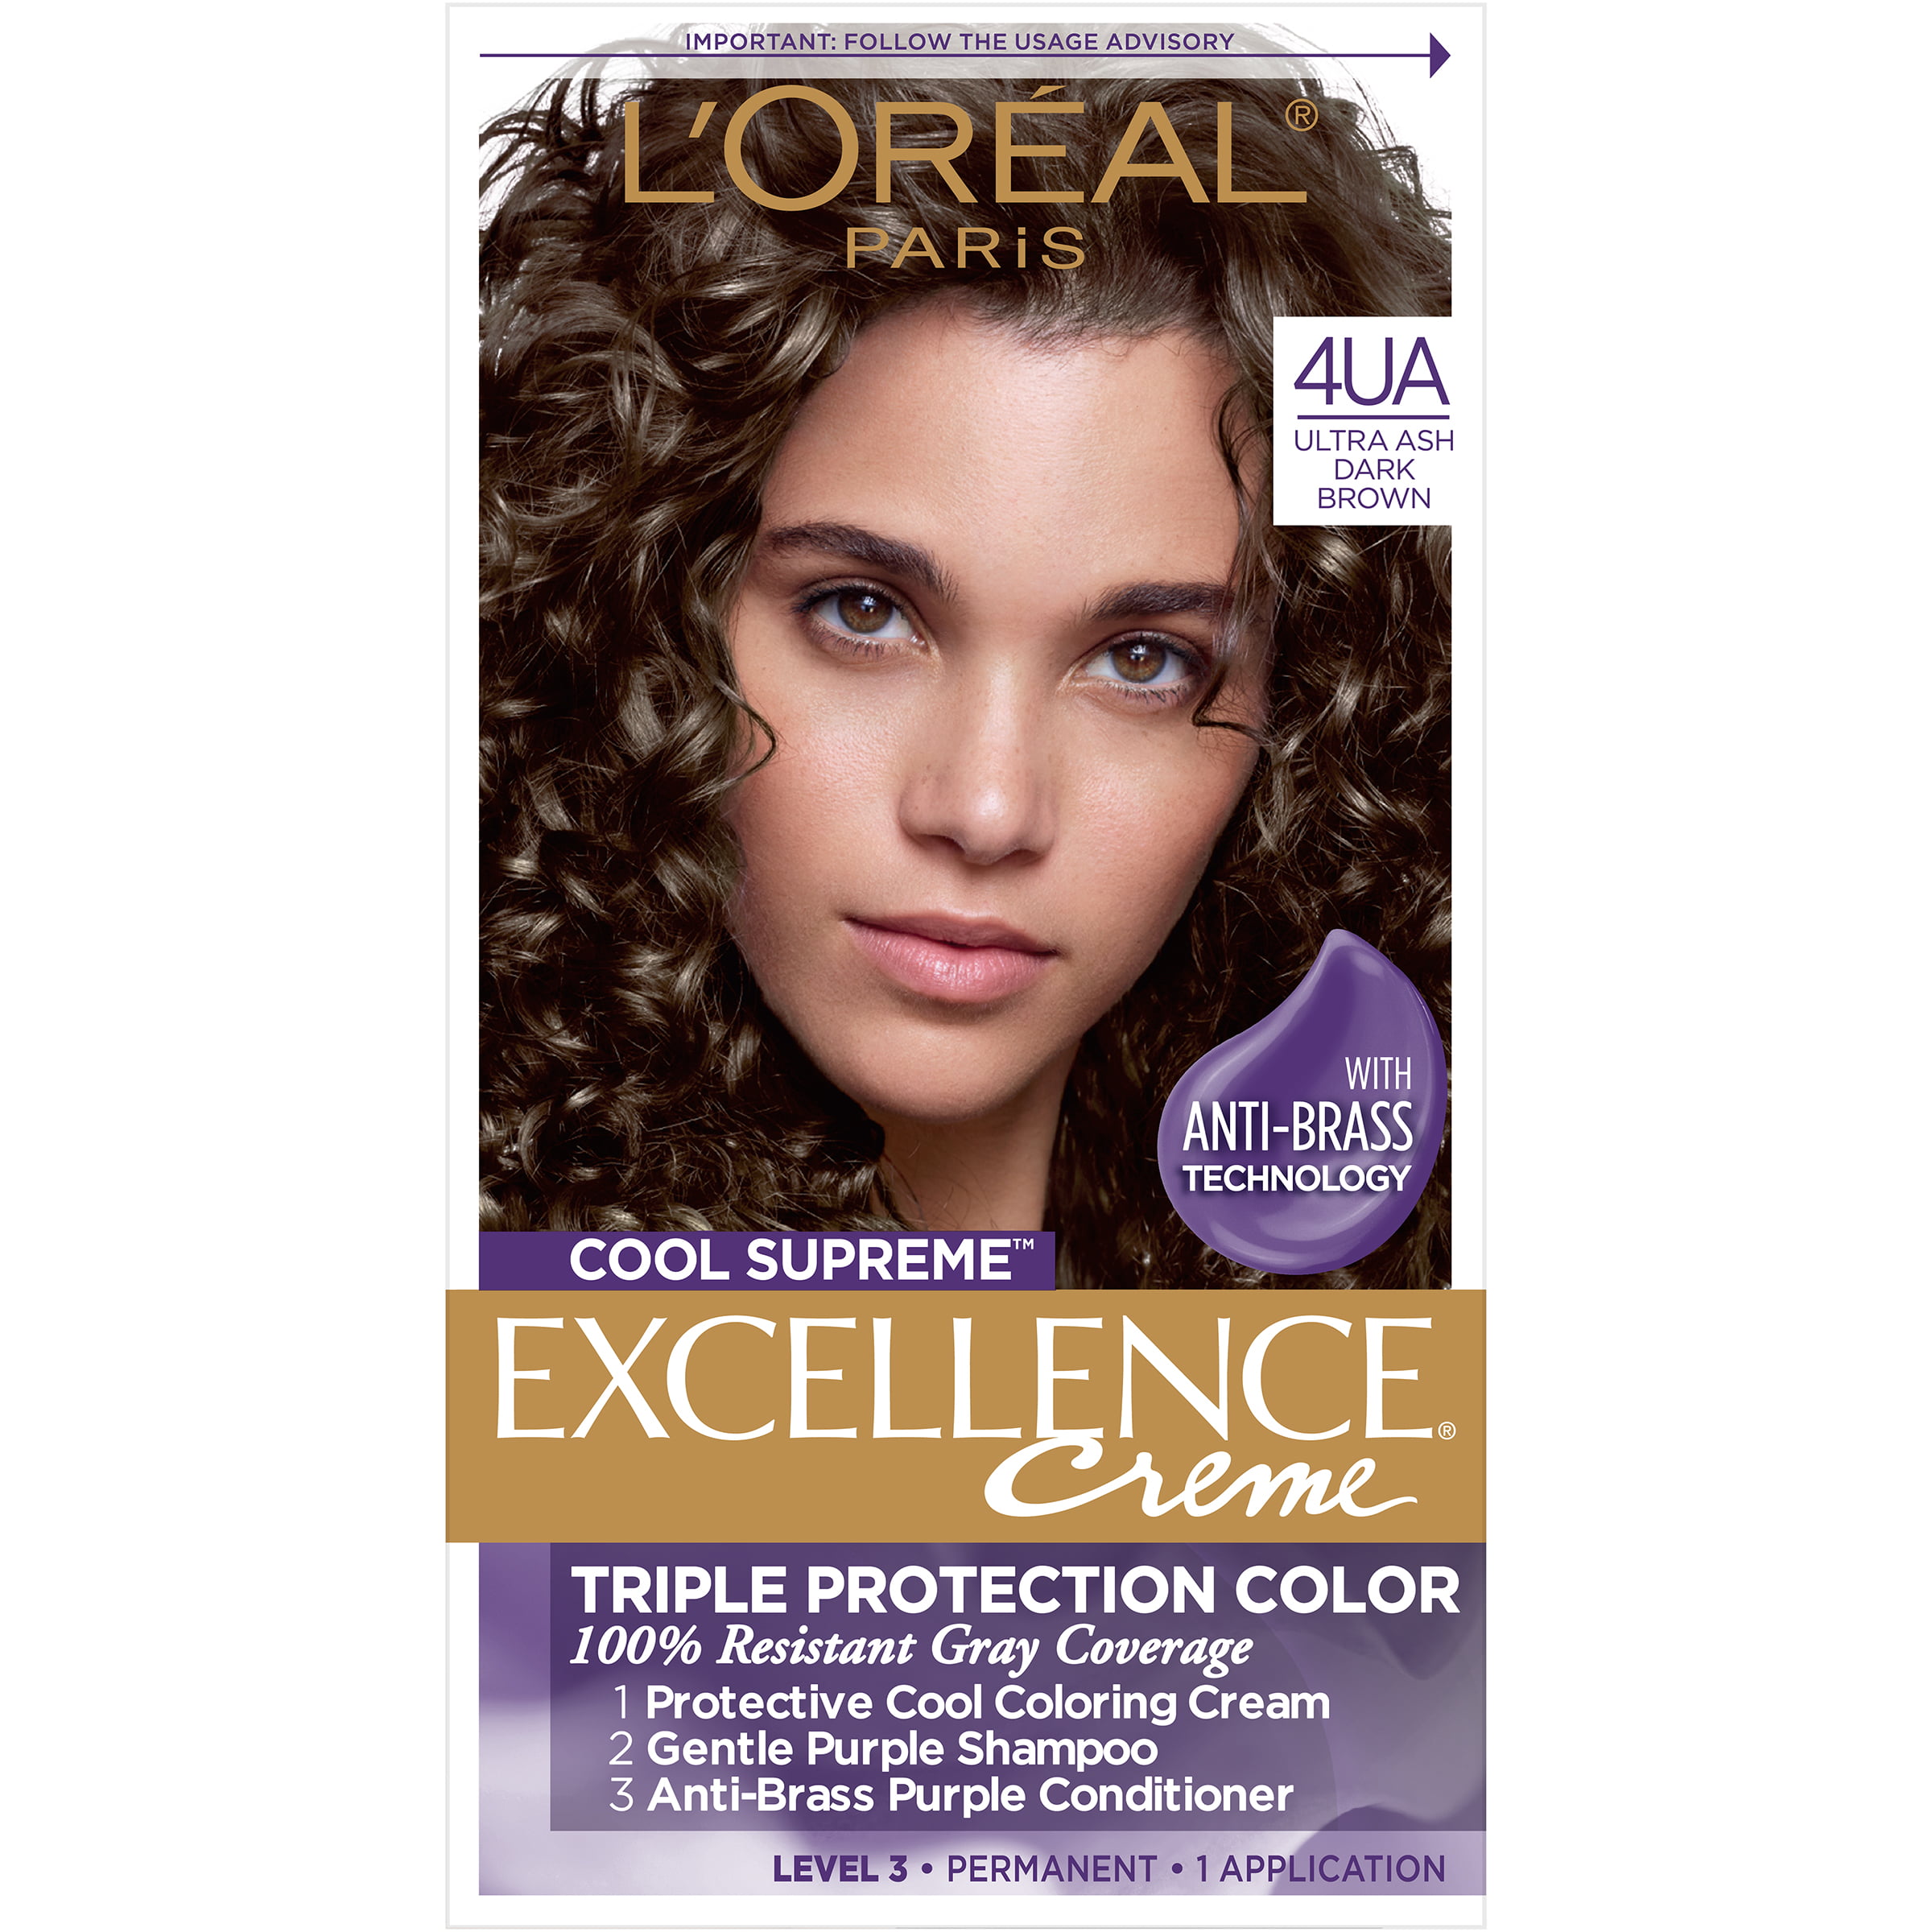 L'Oreal Paris Excellence Creme Permanent Hair Color, Ultra Ash Dark Brown - image 1 of 10